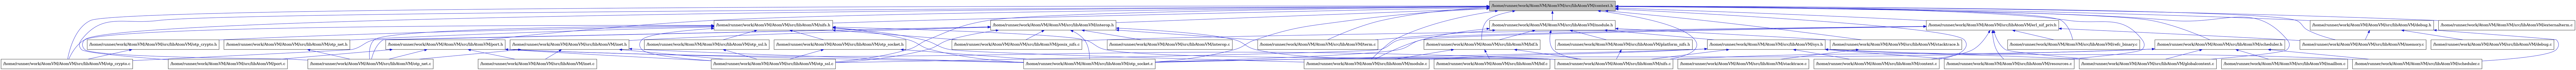 digraph {
    graph [bgcolor="#00000000"]
    node [shape=rectangle style=filled fillcolor="#FFFFFF" font=Helvetica padding=2]
    edge [color="#1414CE"]
    "3" [label="/home/runner/work/AtomVM/AtomVM/src/libAtomVM/bif.c" tooltip="/home/runner/work/AtomVM/AtomVM/src/libAtomVM/bif.c"]
    "2" [label="/home/runner/work/AtomVM/AtomVM/src/libAtomVM/bif.h" tooltip="/home/runner/work/AtomVM/AtomVM/src/libAtomVM/bif.h"]
    "27" [label="/home/runner/work/AtomVM/AtomVM/src/libAtomVM/platform_nifs.h" tooltip="/home/runner/work/AtomVM/AtomVM/src/libAtomVM/platform_nifs.h"]
    "15" [label="/home/runner/work/AtomVM/AtomVM/src/libAtomVM/posix_nifs.c" tooltip="/home/runner/work/AtomVM/AtomVM/src/libAtomVM/posix_nifs.c"]
    "21" [label="/home/runner/work/AtomVM/AtomVM/src/libAtomVM/inet.c" tooltip="/home/runner/work/AtomVM/AtomVM/src/libAtomVM/inet.c"]
    "20" [label="/home/runner/work/AtomVM/AtomVM/src/libAtomVM/inet.h" tooltip="/home/runner/work/AtomVM/AtomVM/src/libAtomVM/inet.h"]
    "10" [label="/home/runner/work/AtomVM/AtomVM/src/libAtomVM/scheduler.c" tooltip="/home/runner/work/AtomVM/AtomVM/src/libAtomVM/scheduler.c"]
    "38" [label="/home/runner/work/AtomVM/AtomVM/src/libAtomVM/scheduler.h" tooltip="/home/runner/work/AtomVM/AtomVM/src/libAtomVM/scheduler.h"]
    "6" [label="/home/runner/work/AtomVM/AtomVM/src/libAtomVM/context.c" tooltip="/home/runner/work/AtomVM/AtomVM/src/libAtomVM/context.c"]
    "1" [label="/home/runner/work/AtomVM/AtomVM/src/libAtomVM/context.h" tooltip="/home/runner/work/AtomVM/AtomVM/src/libAtomVM/context.h" fillcolor="#BFBFBF"]
    "36" [label="/home/runner/work/AtomVM/AtomVM/src/libAtomVM/port.c" tooltip="/home/runner/work/AtomVM/AtomVM/src/libAtomVM/port.c"]
    "37" [label="/home/runner/work/AtomVM/AtomVM/src/libAtomVM/port.h" tooltip="/home/runner/work/AtomVM/AtomVM/src/libAtomVM/port.h"]
    "29" [label="/home/runner/work/AtomVM/AtomVM/src/libAtomVM/stacktrace.c" tooltip="/home/runner/work/AtomVM/AtomVM/src/libAtomVM/stacktrace.c"]
    "28" [label="/home/runner/work/AtomVM/AtomVM/src/libAtomVM/stacktrace.h" tooltip="/home/runner/work/AtomVM/AtomVM/src/libAtomVM/stacktrace.h"]
    "16" [label="/home/runner/work/AtomVM/AtomVM/src/libAtomVM/refc_binary.c" tooltip="/home/runner/work/AtomVM/AtomVM/src/libAtomVM/refc_binary.c"]
    "39" [label="/home/runner/work/AtomVM/AtomVM/src/libAtomVM/mailbox.c" tooltip="/home/runner/work/AtomVM/AtomVM/src/libAtomVM/mailbox.c"]
    "4" [label="/home/runner/work/AtomVM/AtomVM/src/libAtomVM/module.c" tooltip="/home/runner/work/AtomVM/AtomVM/src/libAtomVM/module.c"]
    "26" [label="/home/runner/work/AtomVM/AtomVM/src/libAtomVM/module.h" tooltip="/home/runner/work/AtomVM/AtomVM/src/libAtomVM/module.h"]
    "25" [label="/home/runner/work/AtomVM/AtomVM/src/libAtomVM/term.c" tooltip="/home/runner/work/AtomVM/AtomVM/src/libAtomVM/term.c"]
    "23" [label="/home/runner/work/AtomVM/AtomVM/src/libAtomVM/interop.c" tooltip="/home/runner/work/AtomVM/AtomVM/src/libAtomVM/interop.c"]
    "14" [label="/home/runner/work/AtomVM/AtomVM/src/libAtomVM/otp_ssl.c" tooltip="/home/runner/work/AtomVM/AtomVM/src/libAtomVM/otp_ssl.c"]
    "19" [label="/home/runner/work/AtomVM/AtomVM/src/libAtomVM/interop.h" tooltip="/home/runner/work/AtomVM/AtomVM/src/libAtomVM/interop.h"]
    "35" [label="/home/runner/work/AtomVM/AtomVM/src/libAtomVM/otp_ssl.h" tooltip="/home/runner/work/AtomVM/AtomVM/src/libAtomVM/otp_ssl.h"]
    "17" [label="/home/runner/work/AtomVM/AtomVM/src/libAtomVM/resources.c" tooltip="/home/runner/work/AtomVM/AtomVM/src/libAtomVM/resources.c"]
    "24" [label="/home/runner/work/AtomVM/AtomVM/src/libAtomVM/otp_crypto.c" tooltip="/home/runner/work/AtomVM/AtomVM/src/libAtomVM/otp_crypto.c"]
    "32" [label="/home/runner/work/AtomVM/AtomVM/src/libAtomVM/otp_crypto.h" tooltip="/home/runner/work/AtomVM/AtomVM/src/libAtomVM/otp_crypto.h"]
    "22" [label="/home/runner/work/AtomVM/AtomVM/src/libAtomVM/otp_net.c" tooltip="/home/runner/work/AtomVM/AtomVM/src/libAtomVM/otp_net.c"]
    "33" [label="/home/runner/work/AtomVM/AtomVM/src/libAtomVM/otp_net.h" tooltip="/home/runner/work/AtomVM/AtomVM/src/libAtomVM/otp_net.h"]
    "11" [label="/home/runner/work/AtomVM/AtomVM/src/libAtomVM/erl_nif_priv.h" tooltip="/home/runner/work/AtomVM/AtomVM/src/libAtomVM/erl_nif_priv.h"]
    "30" [label="/home/runner/work/AtomVM/AtomVM/src/libAtomVM/sys.h" tooltip="/home/runner/work/AtomVM/AtomVM/src/libAtomVM/sys.h"]
    "5" [label="/home/runner/work/AtomVM/AtomVM/src/libAtomVM/nifs.c" tooltip="/home/runner/work/AtomVM/AtomVM/src/libAtomVM/nifs.c"]
    "31" [label="/home/runner/work/AtomVM/AtomVM/src/libAtomVM/nifs.h" tooltip="/home/runner/work/AtomVM/AtomVM/src/libAtomVM/nifs.h"]
    "8" [label="/home/runner/work/AtomVM/AtomVM/src/libAtomVM/debug.c" tooltip="/home/runner/work/AtomVM/AtomVM/src/libAtomVM/debug.c"]
    "7" [label="/home/runner/work/AtomVM/AtomVM/src/libAtomVM/debug.h" tooltip="/home/runner/work/AtomVM/AtomVM/src/libAtomVM/debug.h"]
    "12" [label="/home/runner/work/AtomVM/AtomVM/src/libAtomVM/globalcontext.c" tooltip="/home/runner/work/AtomVM/AtomVM/src/libAtomVM/globalcontext.c"]
    "9" [label="/home/runner/work/AtomVM/AtomVM/src/libAtomVM/memory.c" tooltip="/home/runner/work/AtomVM/AtomVM/src/libAtomVM/memory.c"]
    "13" [label="/home/runner/work/AtomVM/AtomVM/src/libAtomVM/otp_socket.c" tooltip="/home/runner/work/AtomVM/AtomVM/src/libAtomVM/otp_socket.c"]
    "34" [label="/home/runner/work/AtomVM/AtomVM/src/libAtomVM/otp_socket.h" tooltip="/home/runner/work/AtomVM/AtomVM/src/libAtomVM/otp_socket.h"]
    "18" [label="/home/runner/work/AtomVM/AtomVM/src/libAtomVM/externalterm.c" tooltip="/home/runner/work/AtomVM/AtomVM/src/libAtomVM/externalterm.c"]
    "2" -> "3" [dir=back tooltip="include"]
    "2" -> "4" [dir=back tooltip="include"]
    "2" -> "5" [dir=back tooltip="include"]
    "27" -> "5" [dir=back tooltip="include"]
    "20" -> "21" [dir=back tooltip="include"]
    "20" -> "22" [dir=back tooltip="include"]
    "20" -> "13" [dir=back tooltip="include"]
    "20" -> "14" [dir=back tooltip="include"]
    "38" -> "12" [dir=back tooltip="include"]
    "38" -> "39" [dir=back tooltip="include"]
    "38" -> "5" [dir=back tooltip="include"]
    "38" -> "13" [dir=back tooltip="include"]
    "38" -> "10" [dir=back tooltip="include"]
    "1" -> "2" [dir=back tooltip="include"]
    "1" -> "6" [dir=back tooltip="include"]
    "1" -> "7" [dir=back tooltip="include"]
    "1" -> "11" [dir=back tooltip="include"]
    "1" -> "18" [dir=back tooltip="include"]
    "1" -> "12" [dir=back tooltip="include"]
    "1" -> "19" [dir=back tooltip="include"]
    "1" -> "9" [dir=back tooltip="include"]
    "1" -> "4" [dir=back tooltip="include"]
    "1" -> "26" [dir=back tooltip="include"]
    "1" -> "5" [dir=back tooltip="include"]
    "1" -> "31" [dir=back tooltip="include"]
    "1" -> "24" [dir=back tooltip="include"]
    "1" -> "22" [dir=back tooltip="include"]
    "1" -> "13" [dir=back tooltip="include"]
    "1" -> "14" [dir=back tooltip="include"]
    "1" -> "36" [dir=back tooltip="include"]
    "1" -> "37" [dir=back tooltip="include"]
    "1" -> "16" [dir=back tooltip="include"]
    "1" -> "17" [dir=back tooltip="include"]
    "1" -> "38" [dir=back tooltip="include"]
    "1" -> "28" [dir=back tooltip="include"]
    "1" -> "25" [dir=back tooltip="include"]
    "37" -> "21" [dir=back tooltip="include"]
    "37" -> "5" [dir=back tooltip="include"]
    "37" -> "22" [dir=back tooltip="include"]
    "37" -> "13" [dir=back tooltip="include"]
    "37" -> "14" [dir=back tooltip="include"]
    "37" -> "36" [dir=back tooltip="include"]
    "28" -> "29" [dir=back tooltip="include"]
    "26" -> "2" [dir=back tooltip="include"]
    "26" -> "4" [dir=back tooltip="include"]
    "26" -> "5" [dir=back tooltip="include"]
    "26" -> "27" [dir=back tooltip="include"]
    "26" -> "28" [dir=back tooltip="include"]
    "26" -> "30" [dir=back tooltip="include"]
    "26" -> "25" [dir=back tooltip="include"]
    "19" -> "20" [dir=back tooltip="include"]
    "19" -> "23" [dir=back tooltip="include"]
    "19" -> "5" [dir=back tooltip="include"]
    "19" -> "24" [dir=back tooltip="include"]
    "19" -> "22" [dir=back tooltip="include"]
    "19" -> "13" [dir=back tooltip="include"]
    "19" -> "14" [dir=back tooltip="include"]
    "19" -> "15" [dir=back tooltip="include"]
    "19" -> "25" [dir=back tooltip="include"]
    "35" -> "14" [dir=back tooltip="include"]
    "32" -> "24" [dir=back tooltip="include"]
    "33" -> "22" [dir=back tooltip="include"]
    "11" -> "6" [dir=back tooltip="include"]
    "11" -> "12" [dir=back tooltip="include"]
    "11" -> "9" [dir=back tooltip="include"]
    "11" -> "13" [dir=back tooltip="include"]
    "11" -> "14" [dir=back tooltip="include"]
    "11" -> "15" [dir=back tooltip="include"]
    "11" -> "16" [dir=back tooltip="include"]
    "11" -> "17" [dir=back tooltip="include"]
    "30" -> "6" [dir=back tooltip="include"]
    "30" -> "12" [dir=back tooltip="include"]
    "30" -> "4" [dir=back tooltip="include"]
    "30" -> "5" [dir=back tooltip="include"]
    "30" -> "13" [dir=back tooltip="include"]
    "30" -> "17" [dir=back tooltip="include"]
    "30" -> "10" [dir=back tooltip="include"]
    "31" -> "4" [dir=back tooltip="include"]
    "31" -> "5" [dir=back tooltip="include"]
    "31" -> "24" [dir=back tooltip="include"]
    "31" -> "32" [dir=back tooltip="include"]
    "31" -> "22" [dir=back tooltip="include"]
    "31" -> "33" [dir=back tooltip="include"]
    "31" -> "13" [dir=back tooltip="include"]
    "31" -> "34" [dir=back tooltip="include"]
    "31" -> "14" [dir=back tooltip="include"]
    "31" -> "35" [dir=back tooltip="include"]
    "31" -> "15" [dir=back tooltip="include"]
    "7" -> "8" [dir=back tooltip="include"]
    "7" -> "9" [dir=back tooltip="include"]
    "7" -> "10" [dir=back tooltip="include"]
    "34" -> "13" [dir=back tooltip="include"]
    "34" -> "14" [dir=back tooltip="include"]
}